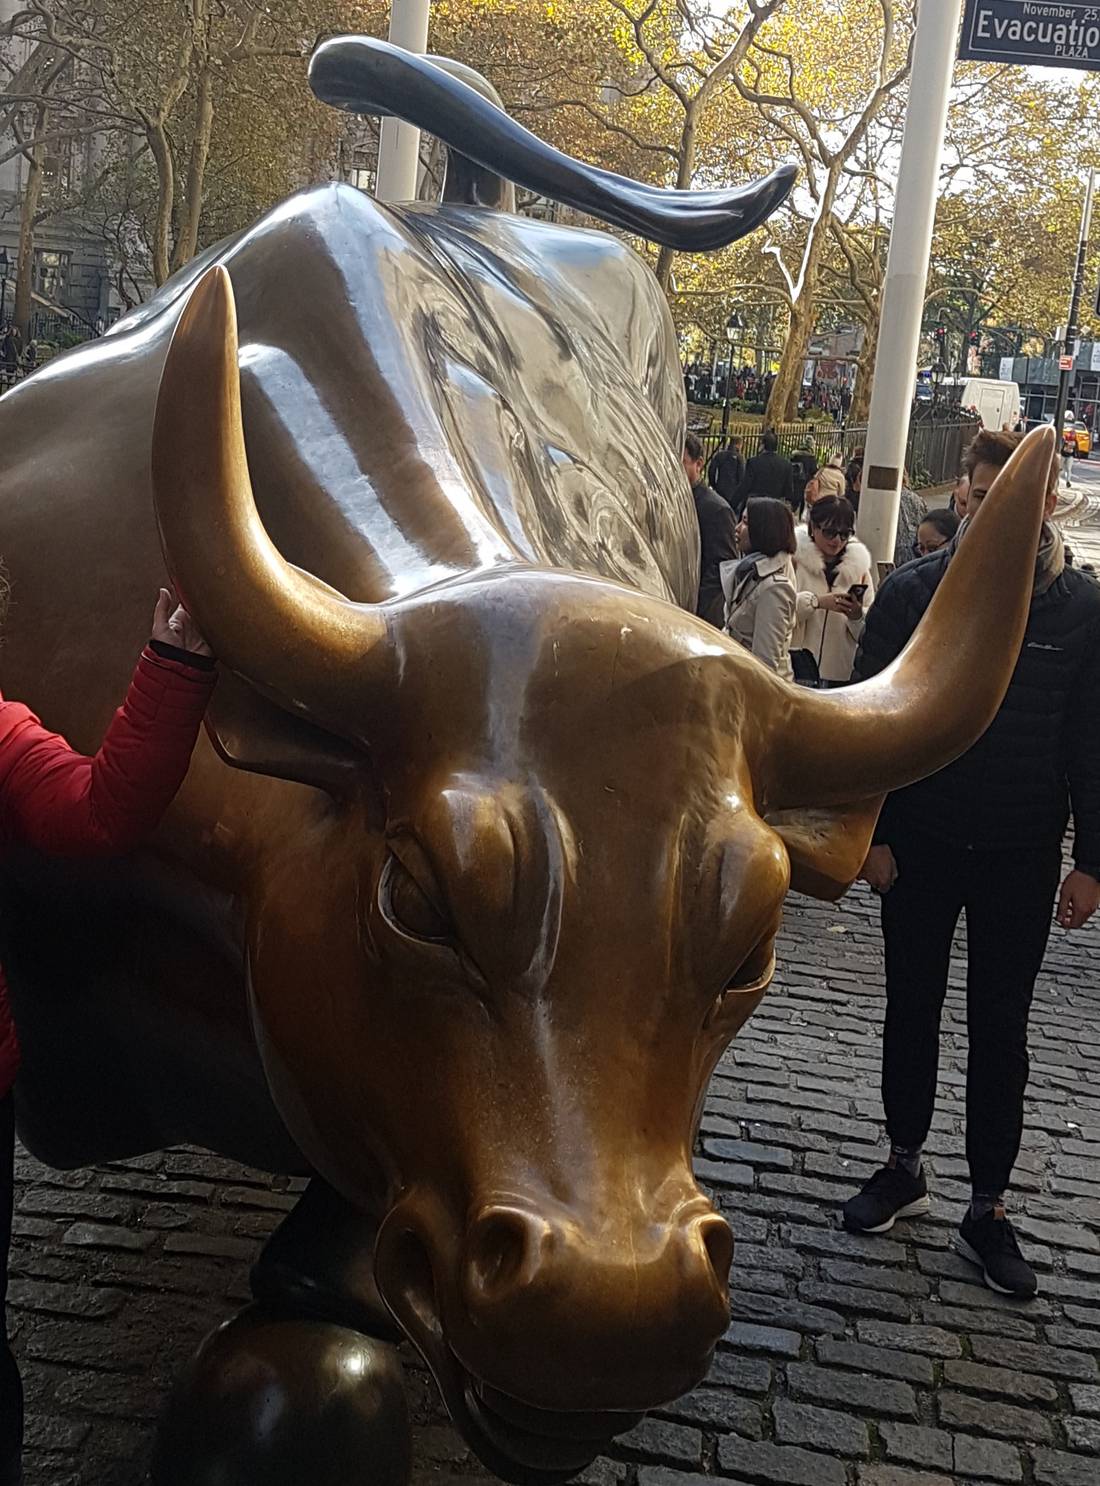 Charging Bull on Wall Street